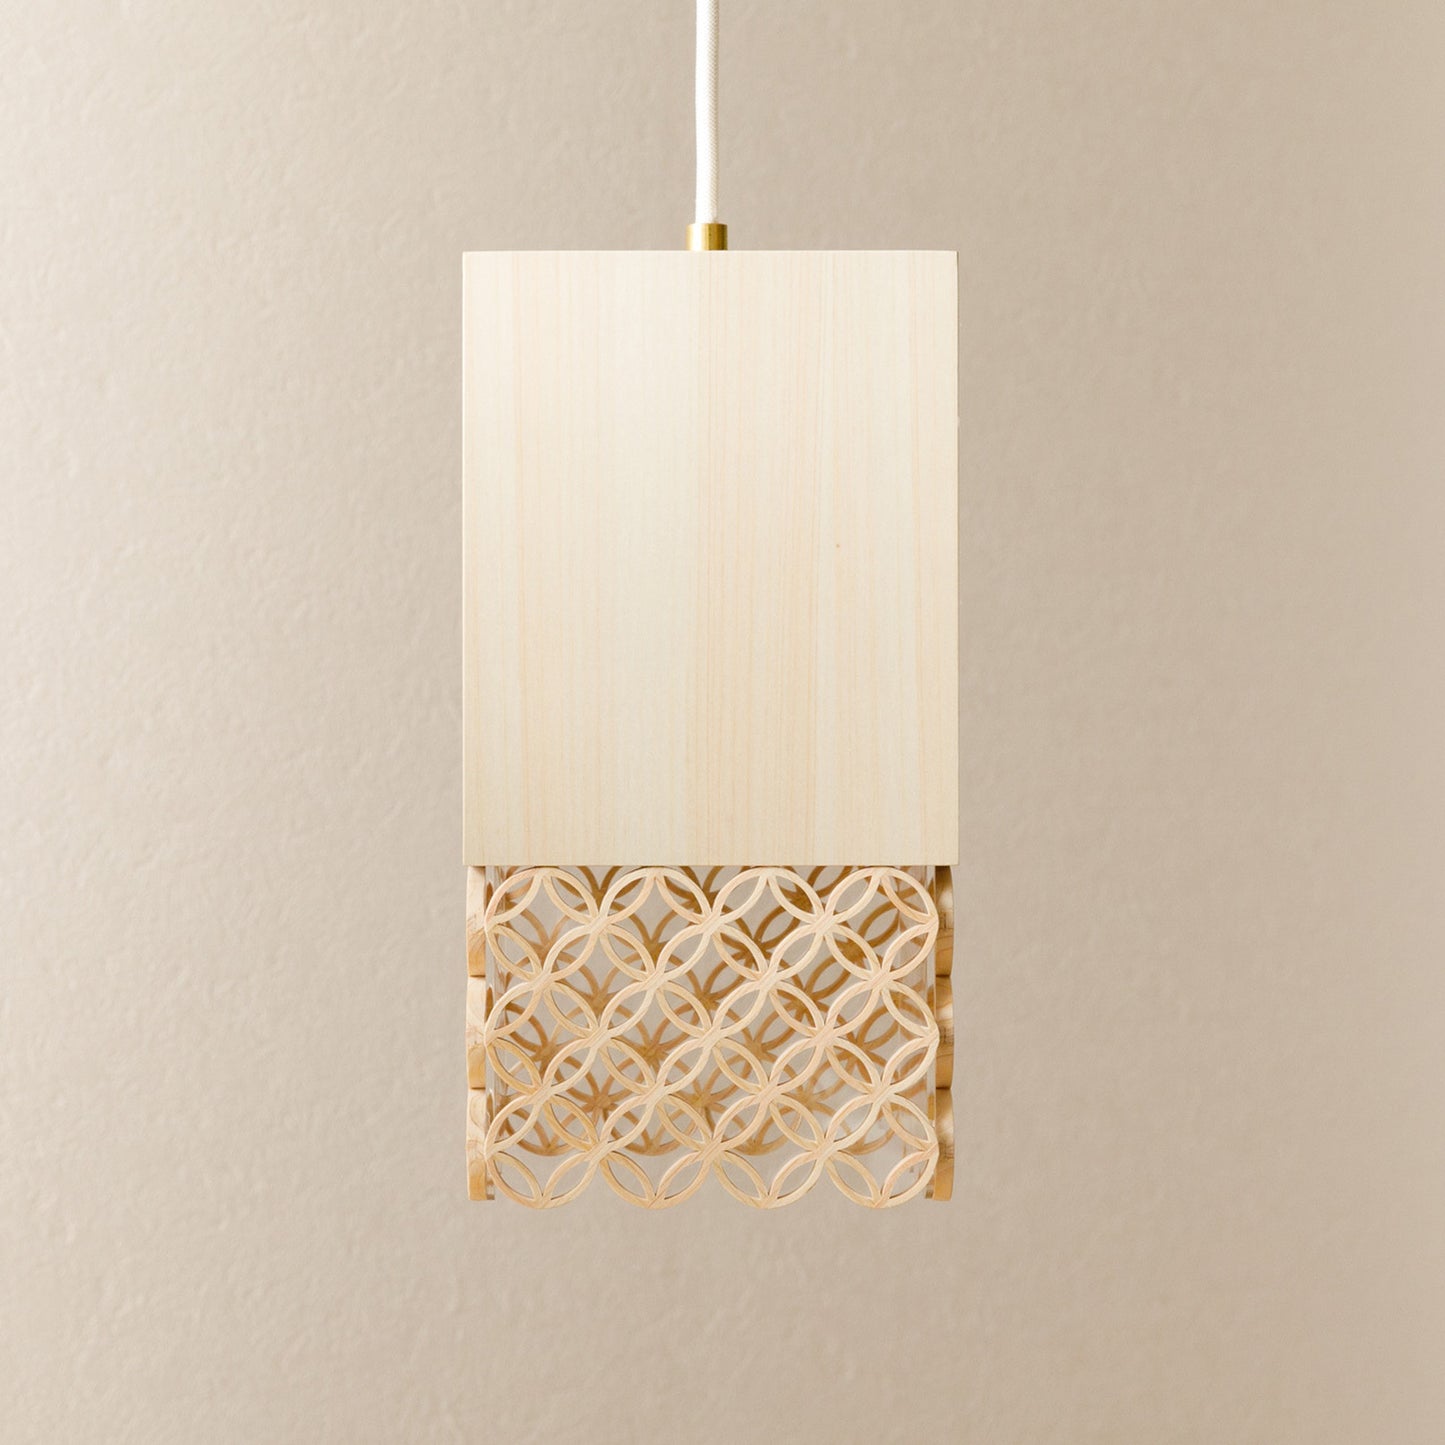 Hanakumiko pendant light lampshade (3 rows)